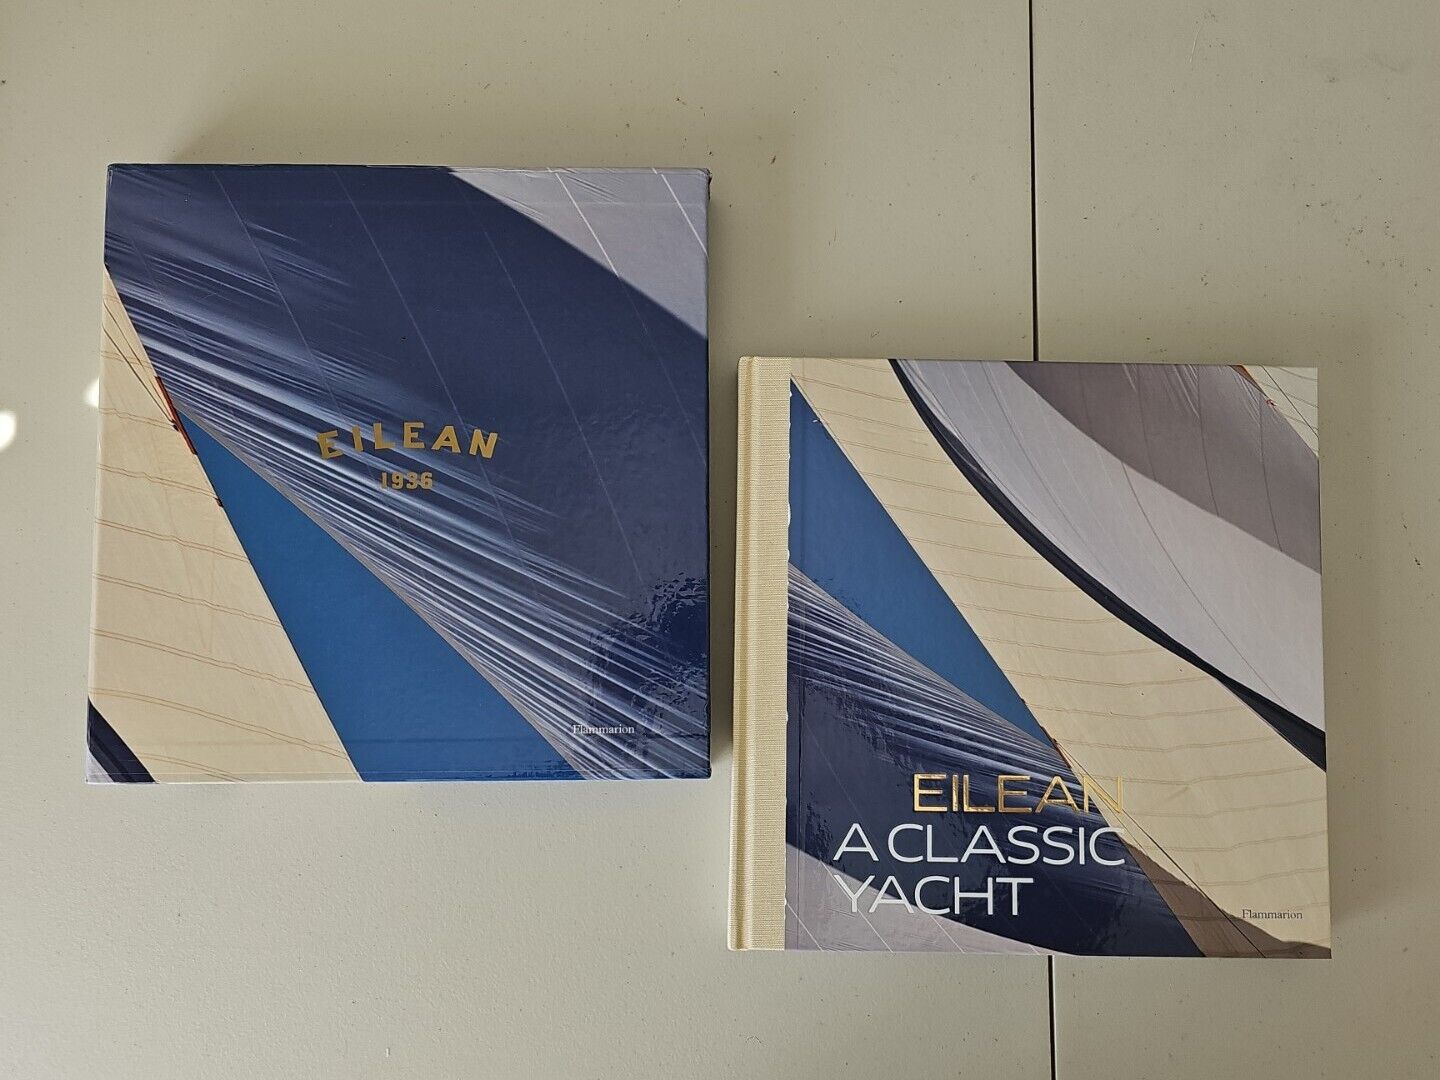 Panerai Eilean A Classic Yacht Book PCYC 2008 Giampiero Negretti - Hardcover